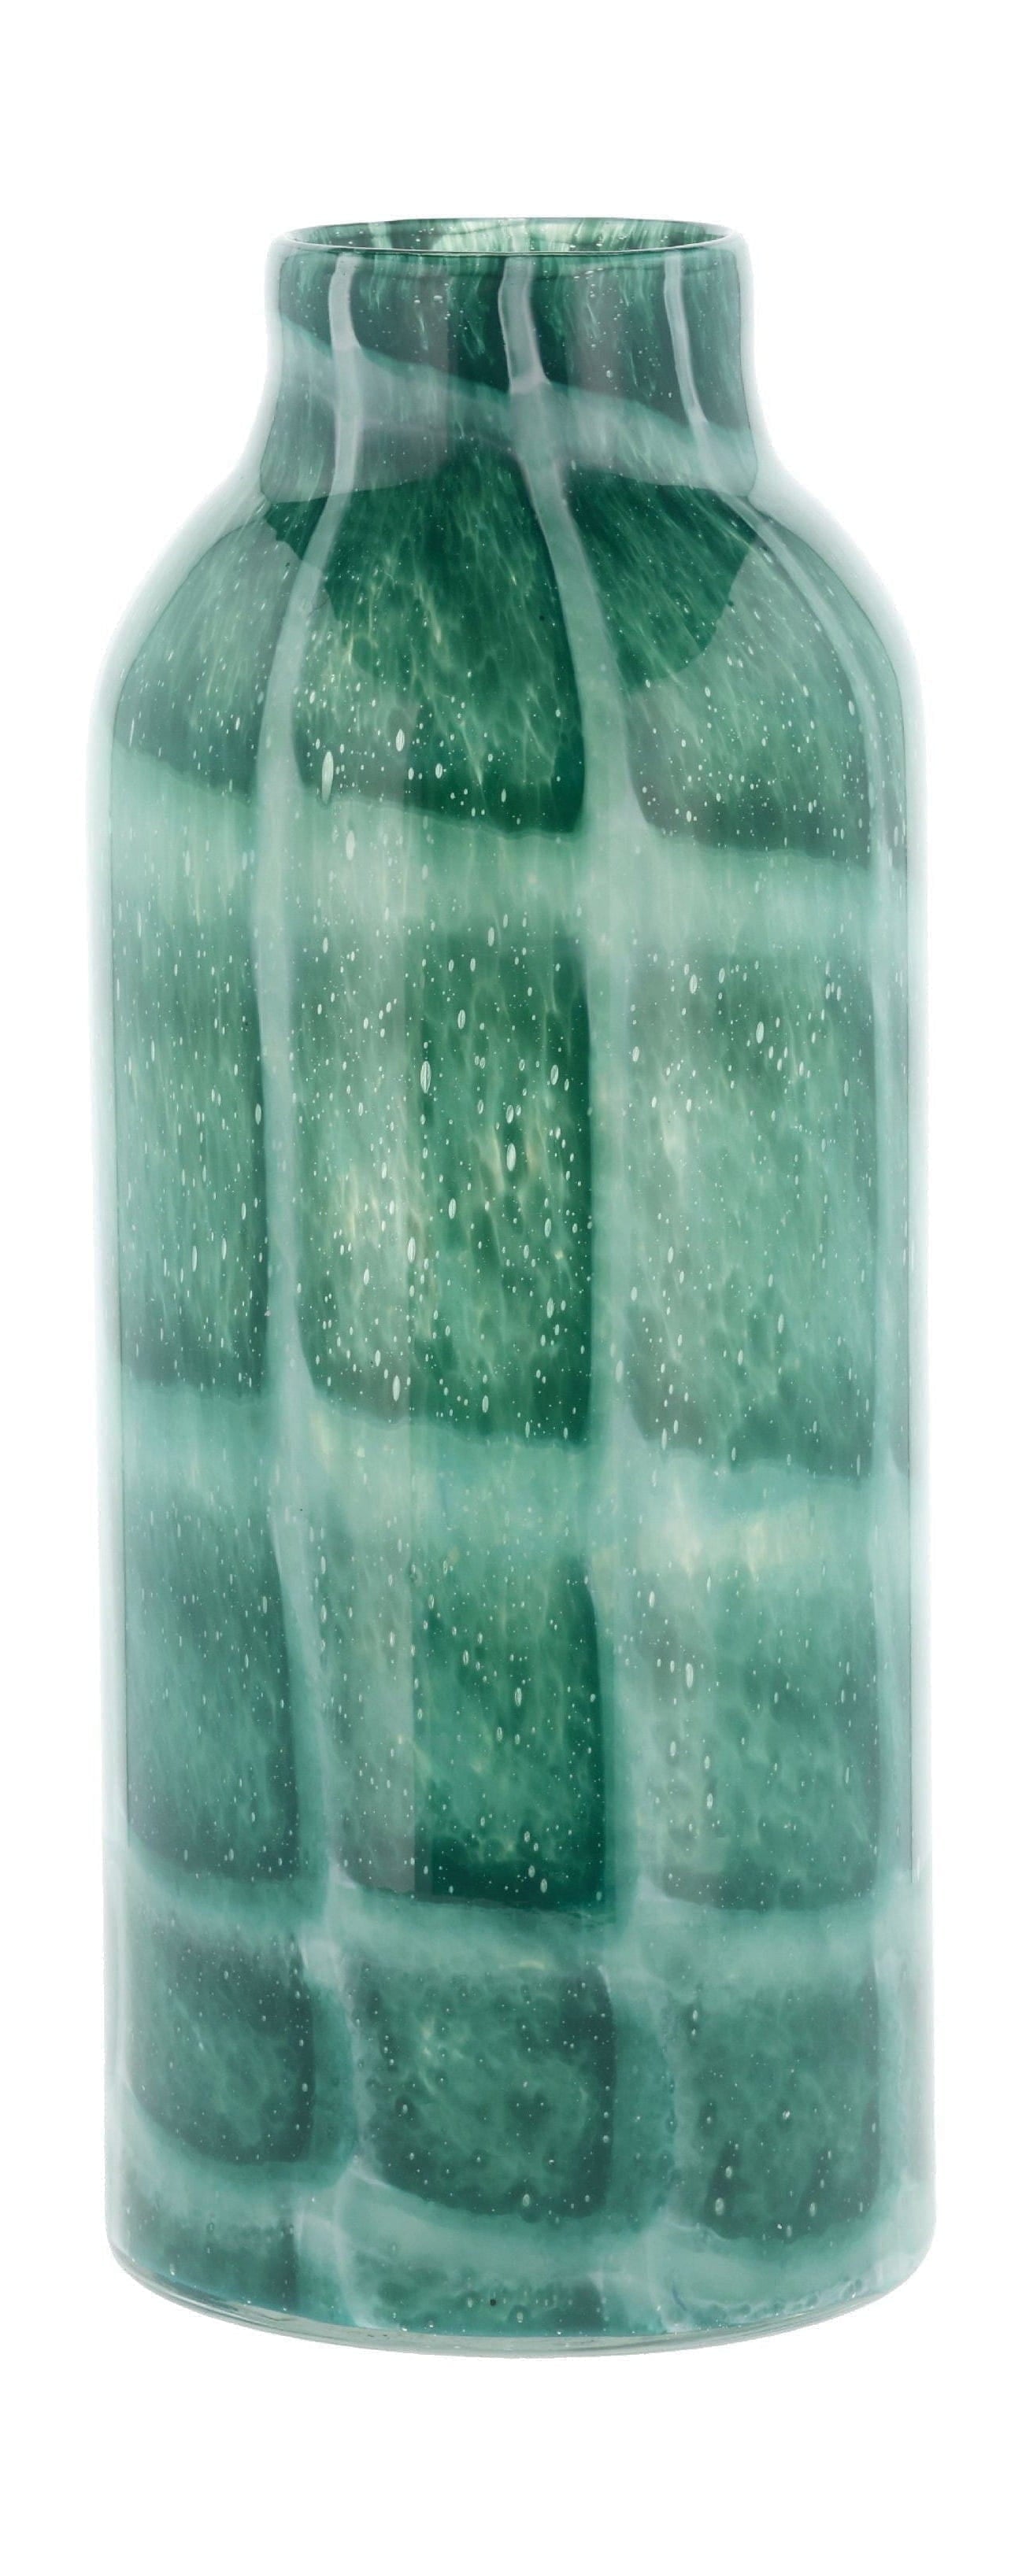 Vase de styles de collection de villa, vert